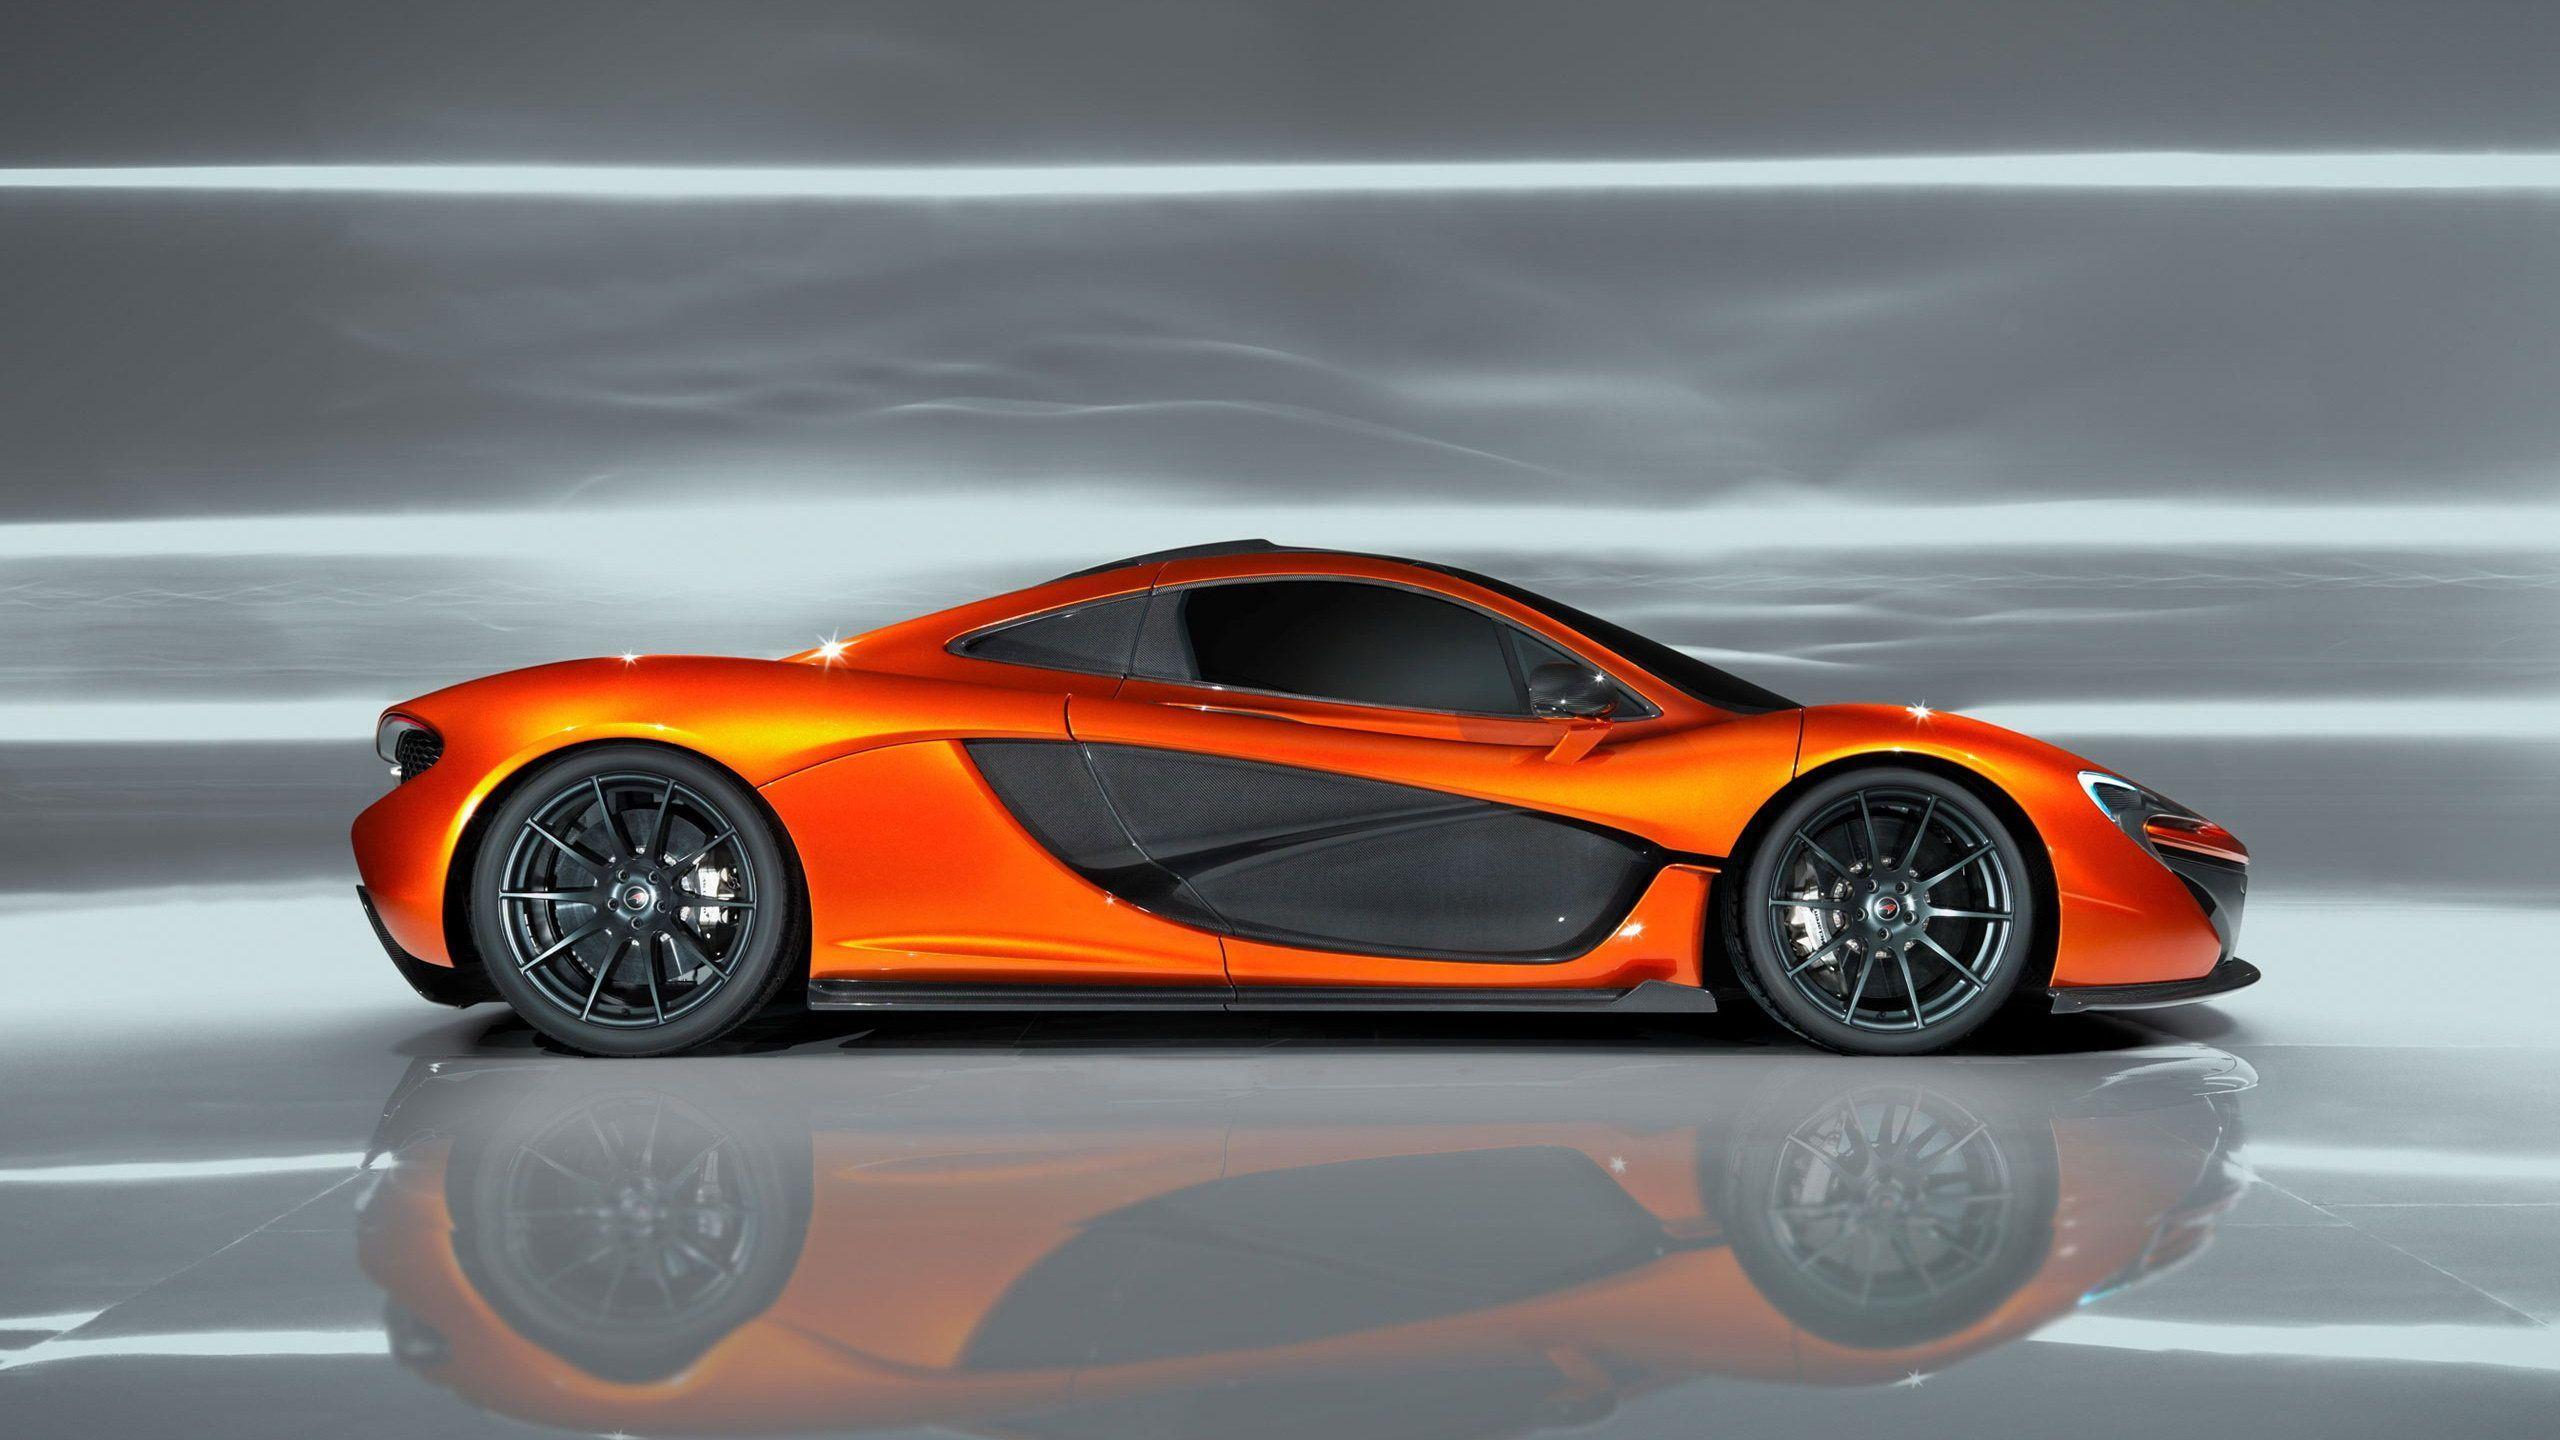 Cool 2014 McLaren P1 Concept sports car wallpaper 2560×1440 11